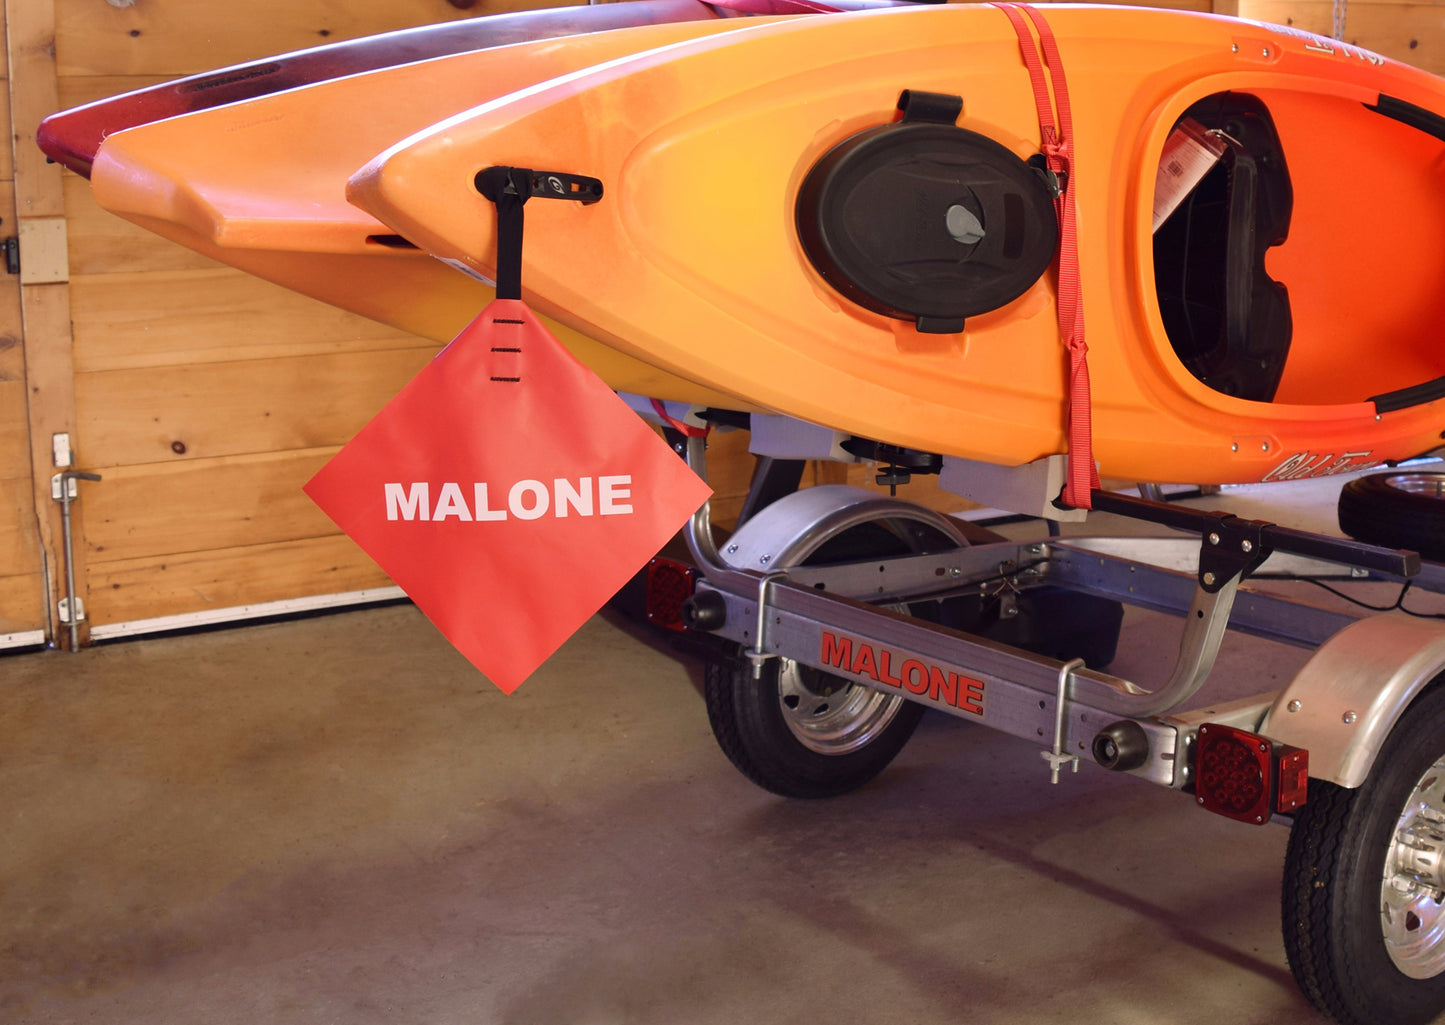 Malone Safety Flag w/ grommet MPG551